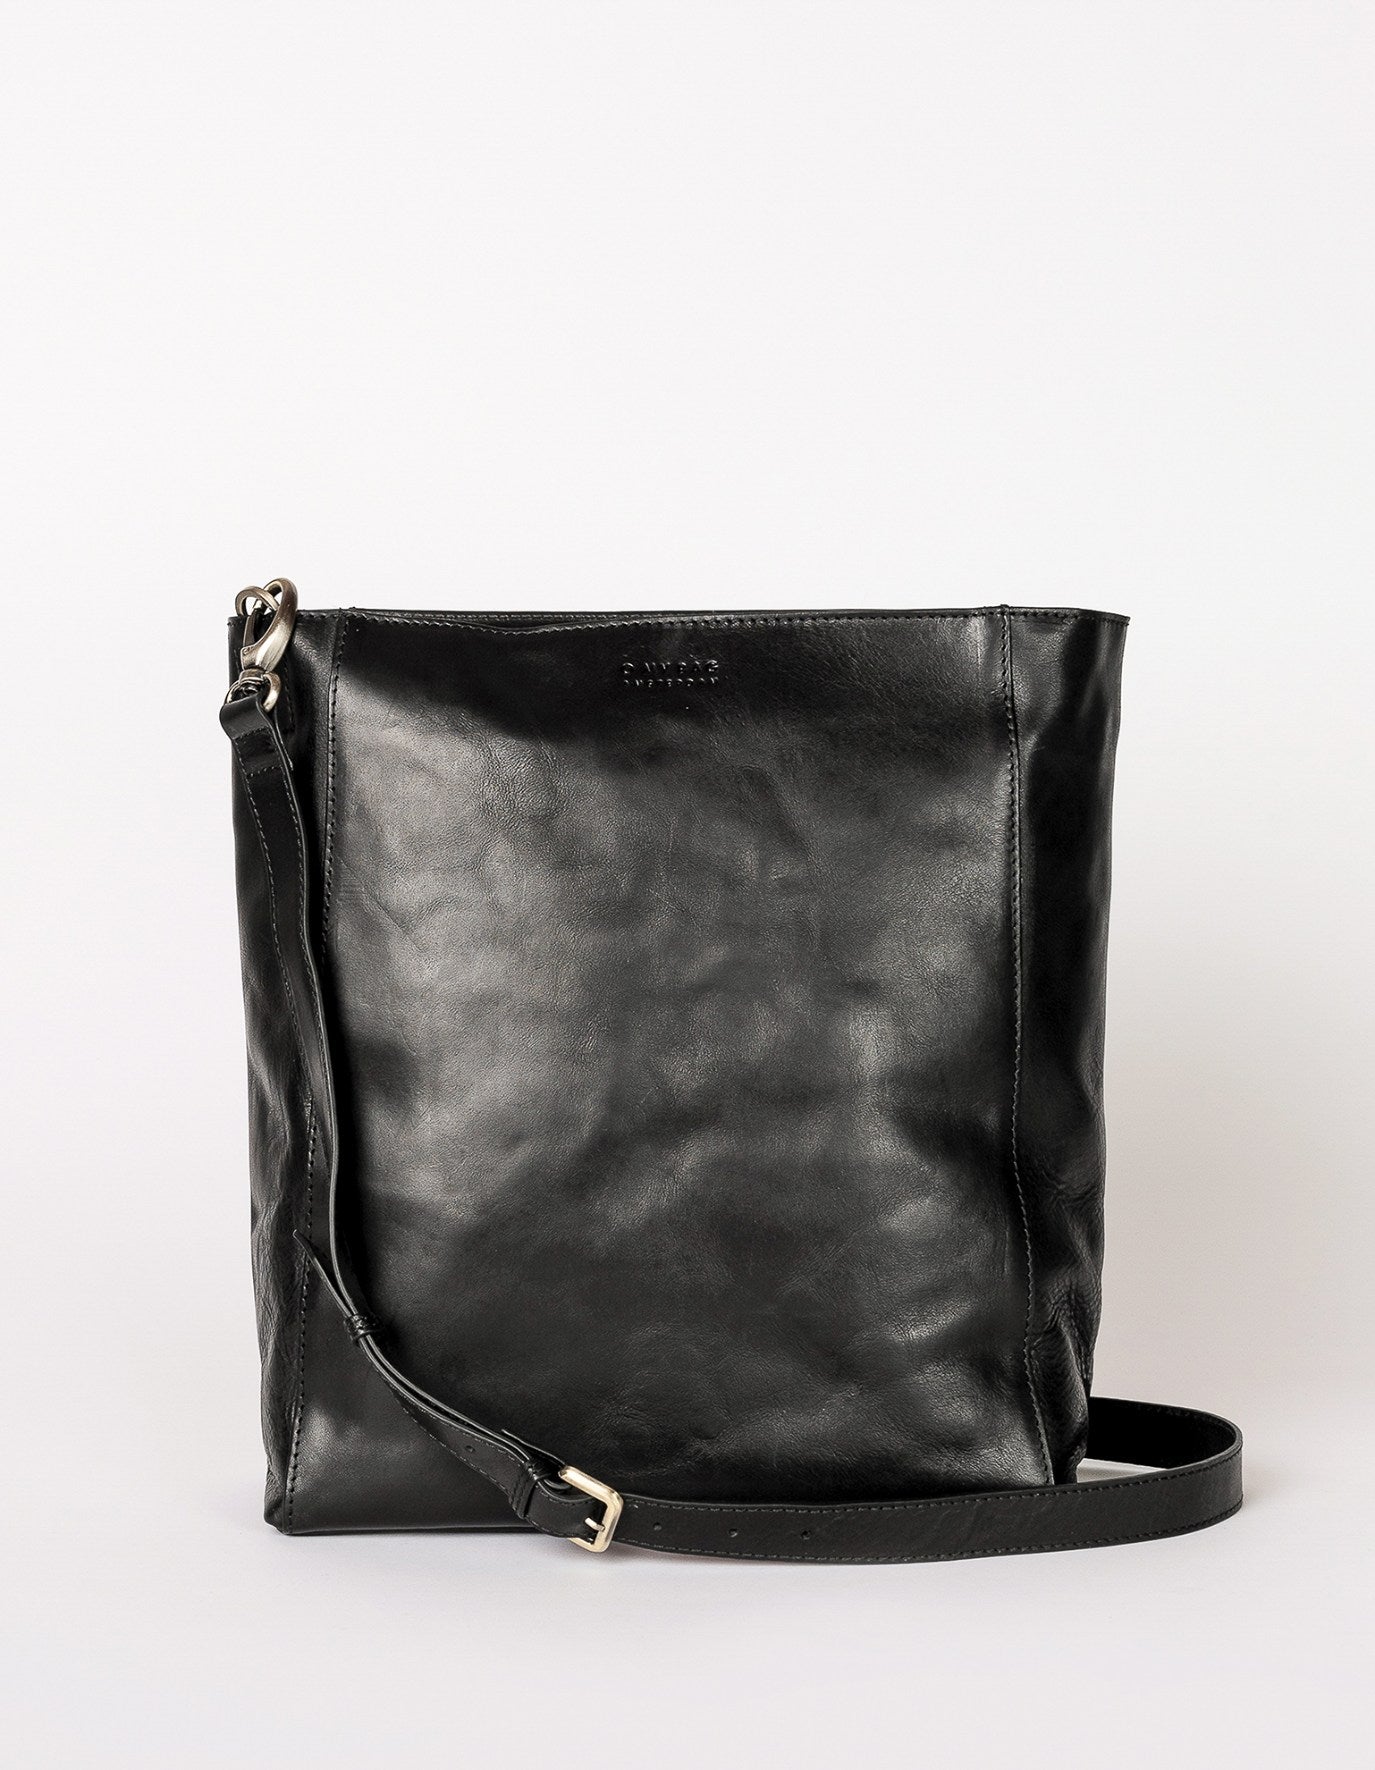 Sofia in Black Stromboli Leather